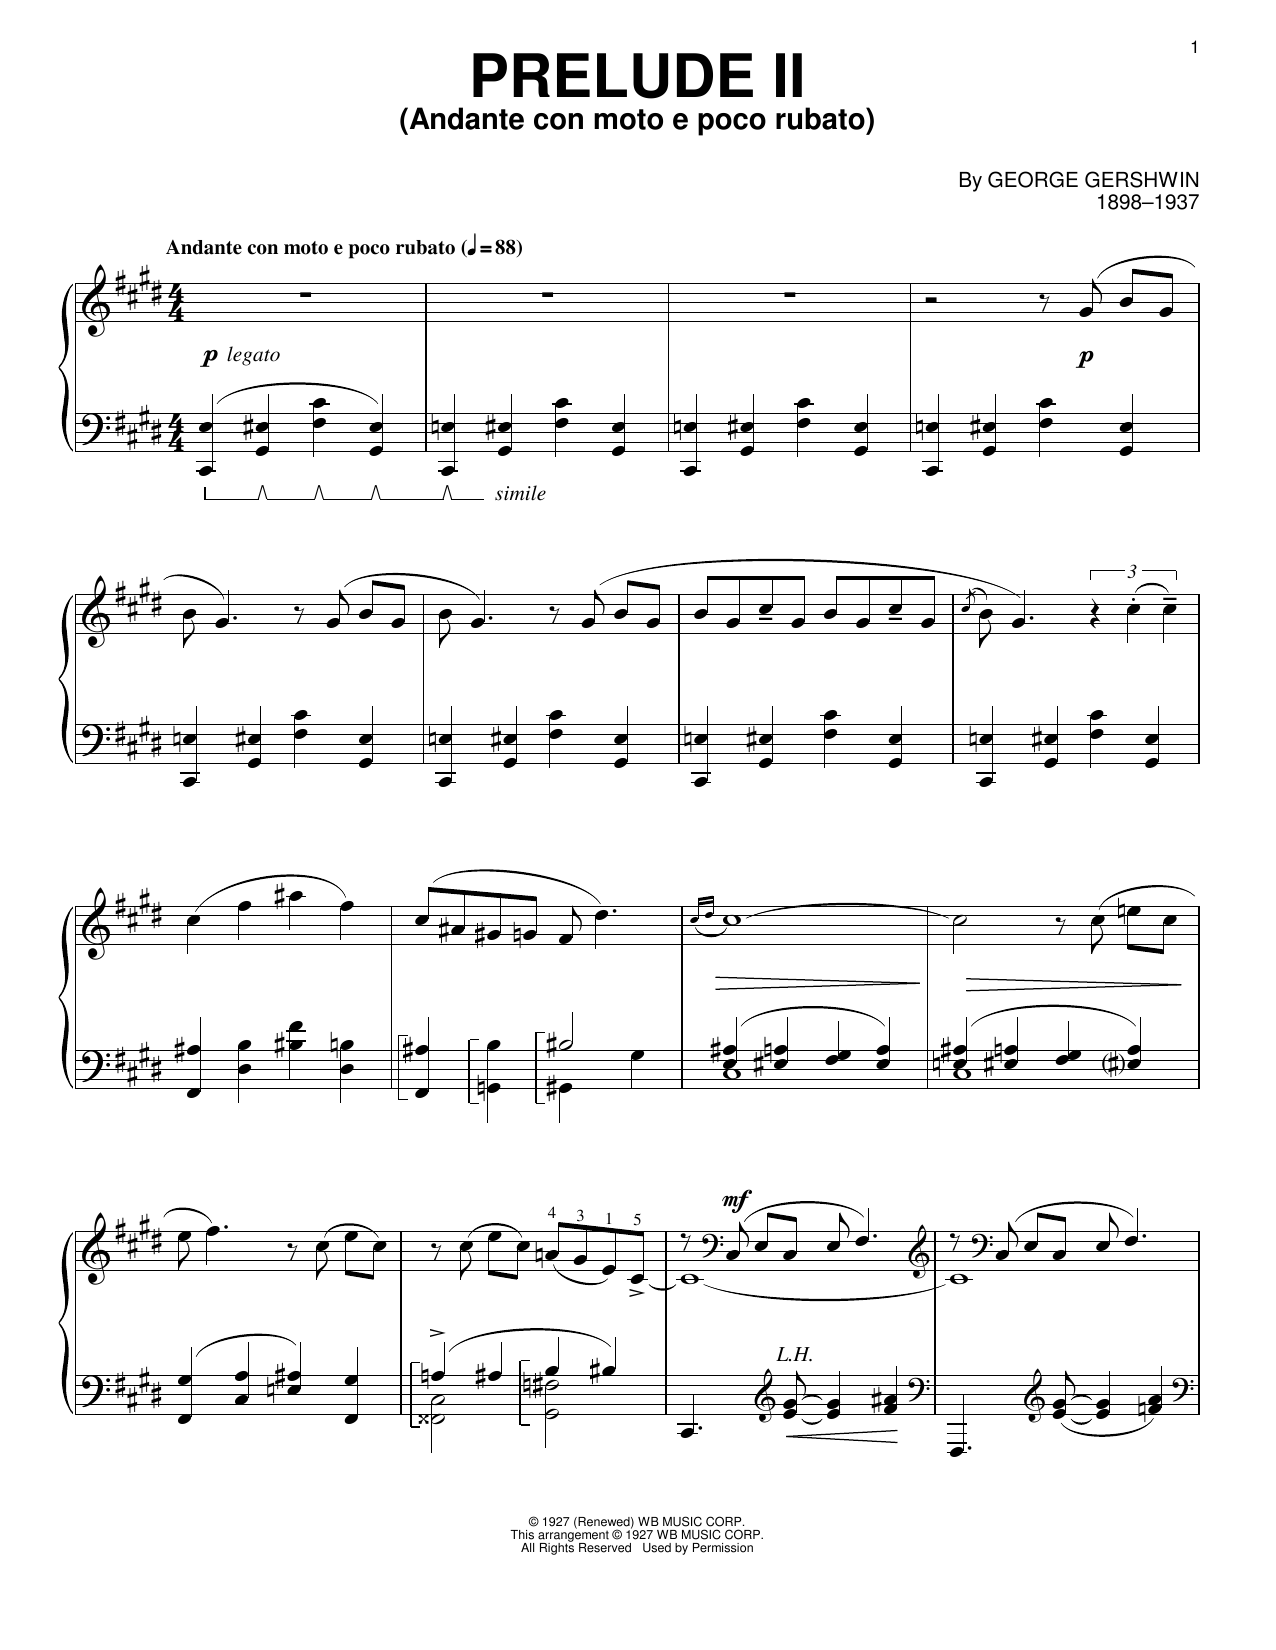 George Gershwin Prelude II (Andante Con Moto E Poco Rubato) Sheet Music Notes & Chords for Trumpet and Piano - Download or Print PDF